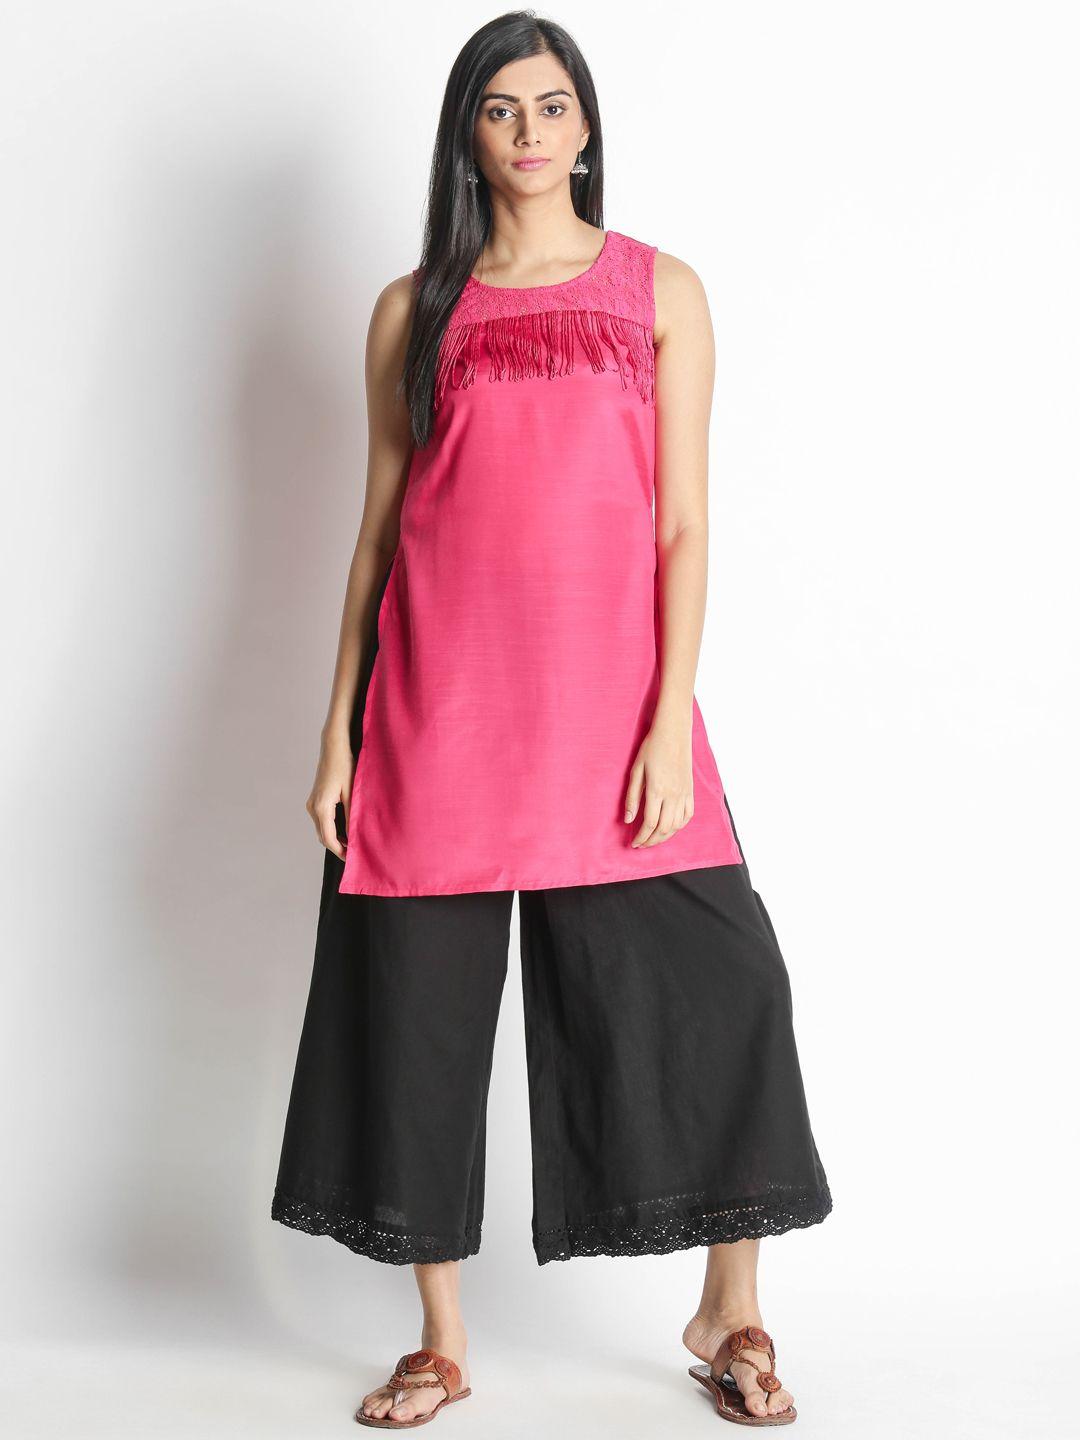 akkriti-by-pantaloons-pink-solid-tunic